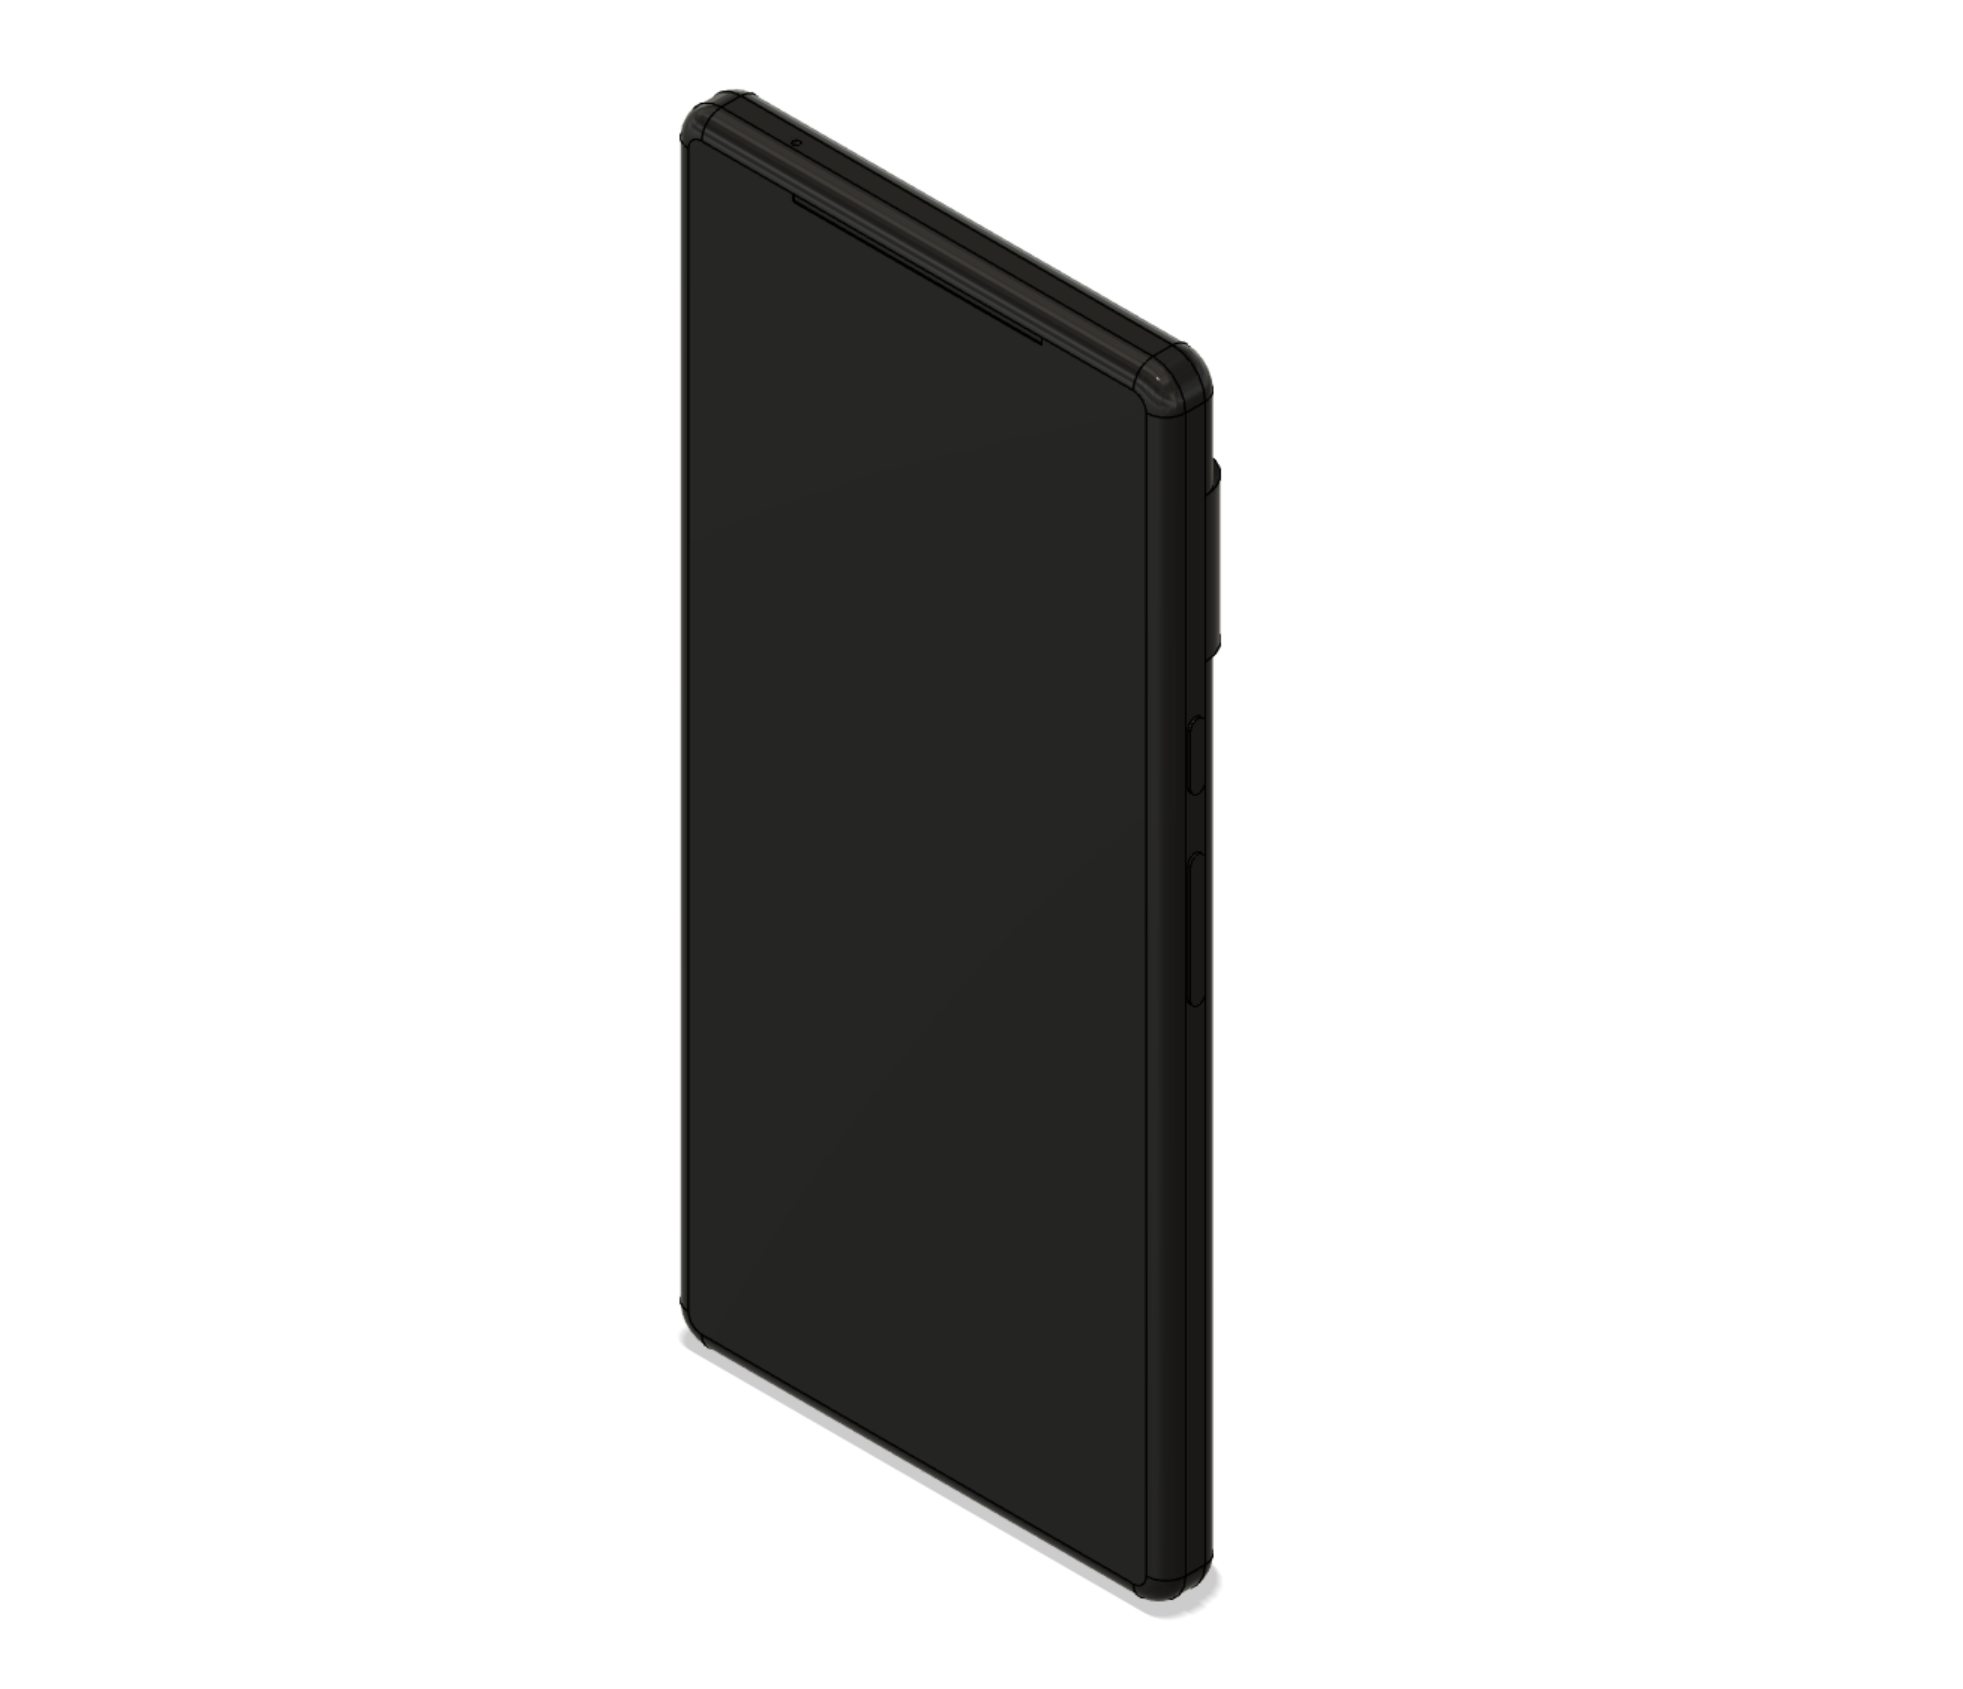 Pixel 6 Pro phone model (stp, stl, 3mf)